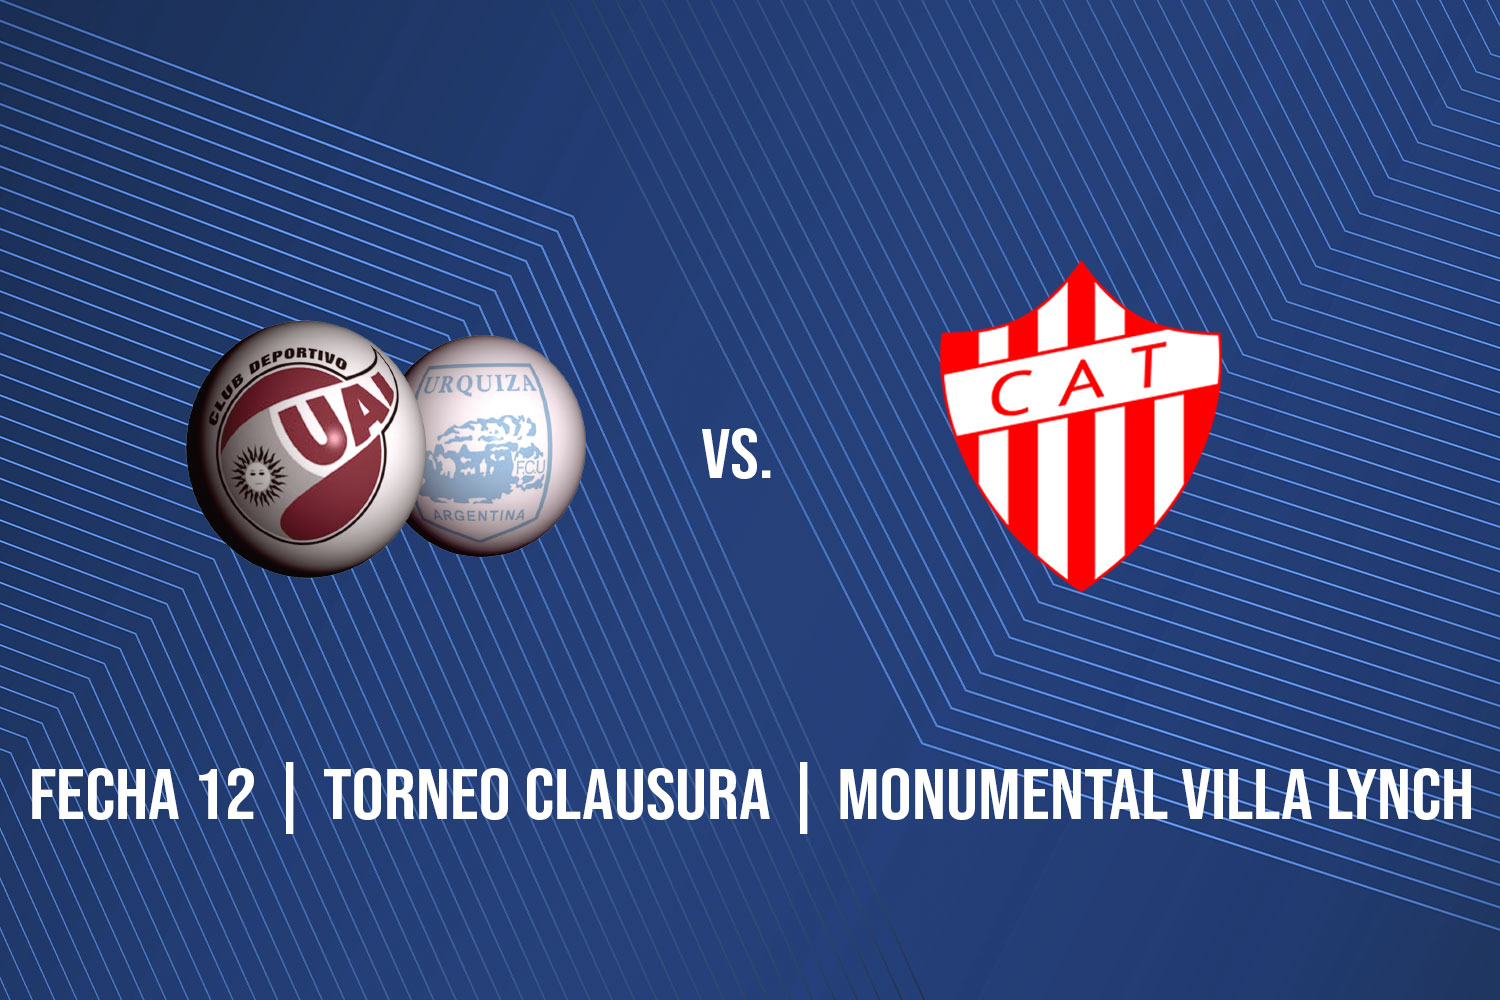 Talleres Remedios vs. UAI Urquiza - 12 December 2021 - Soccerway